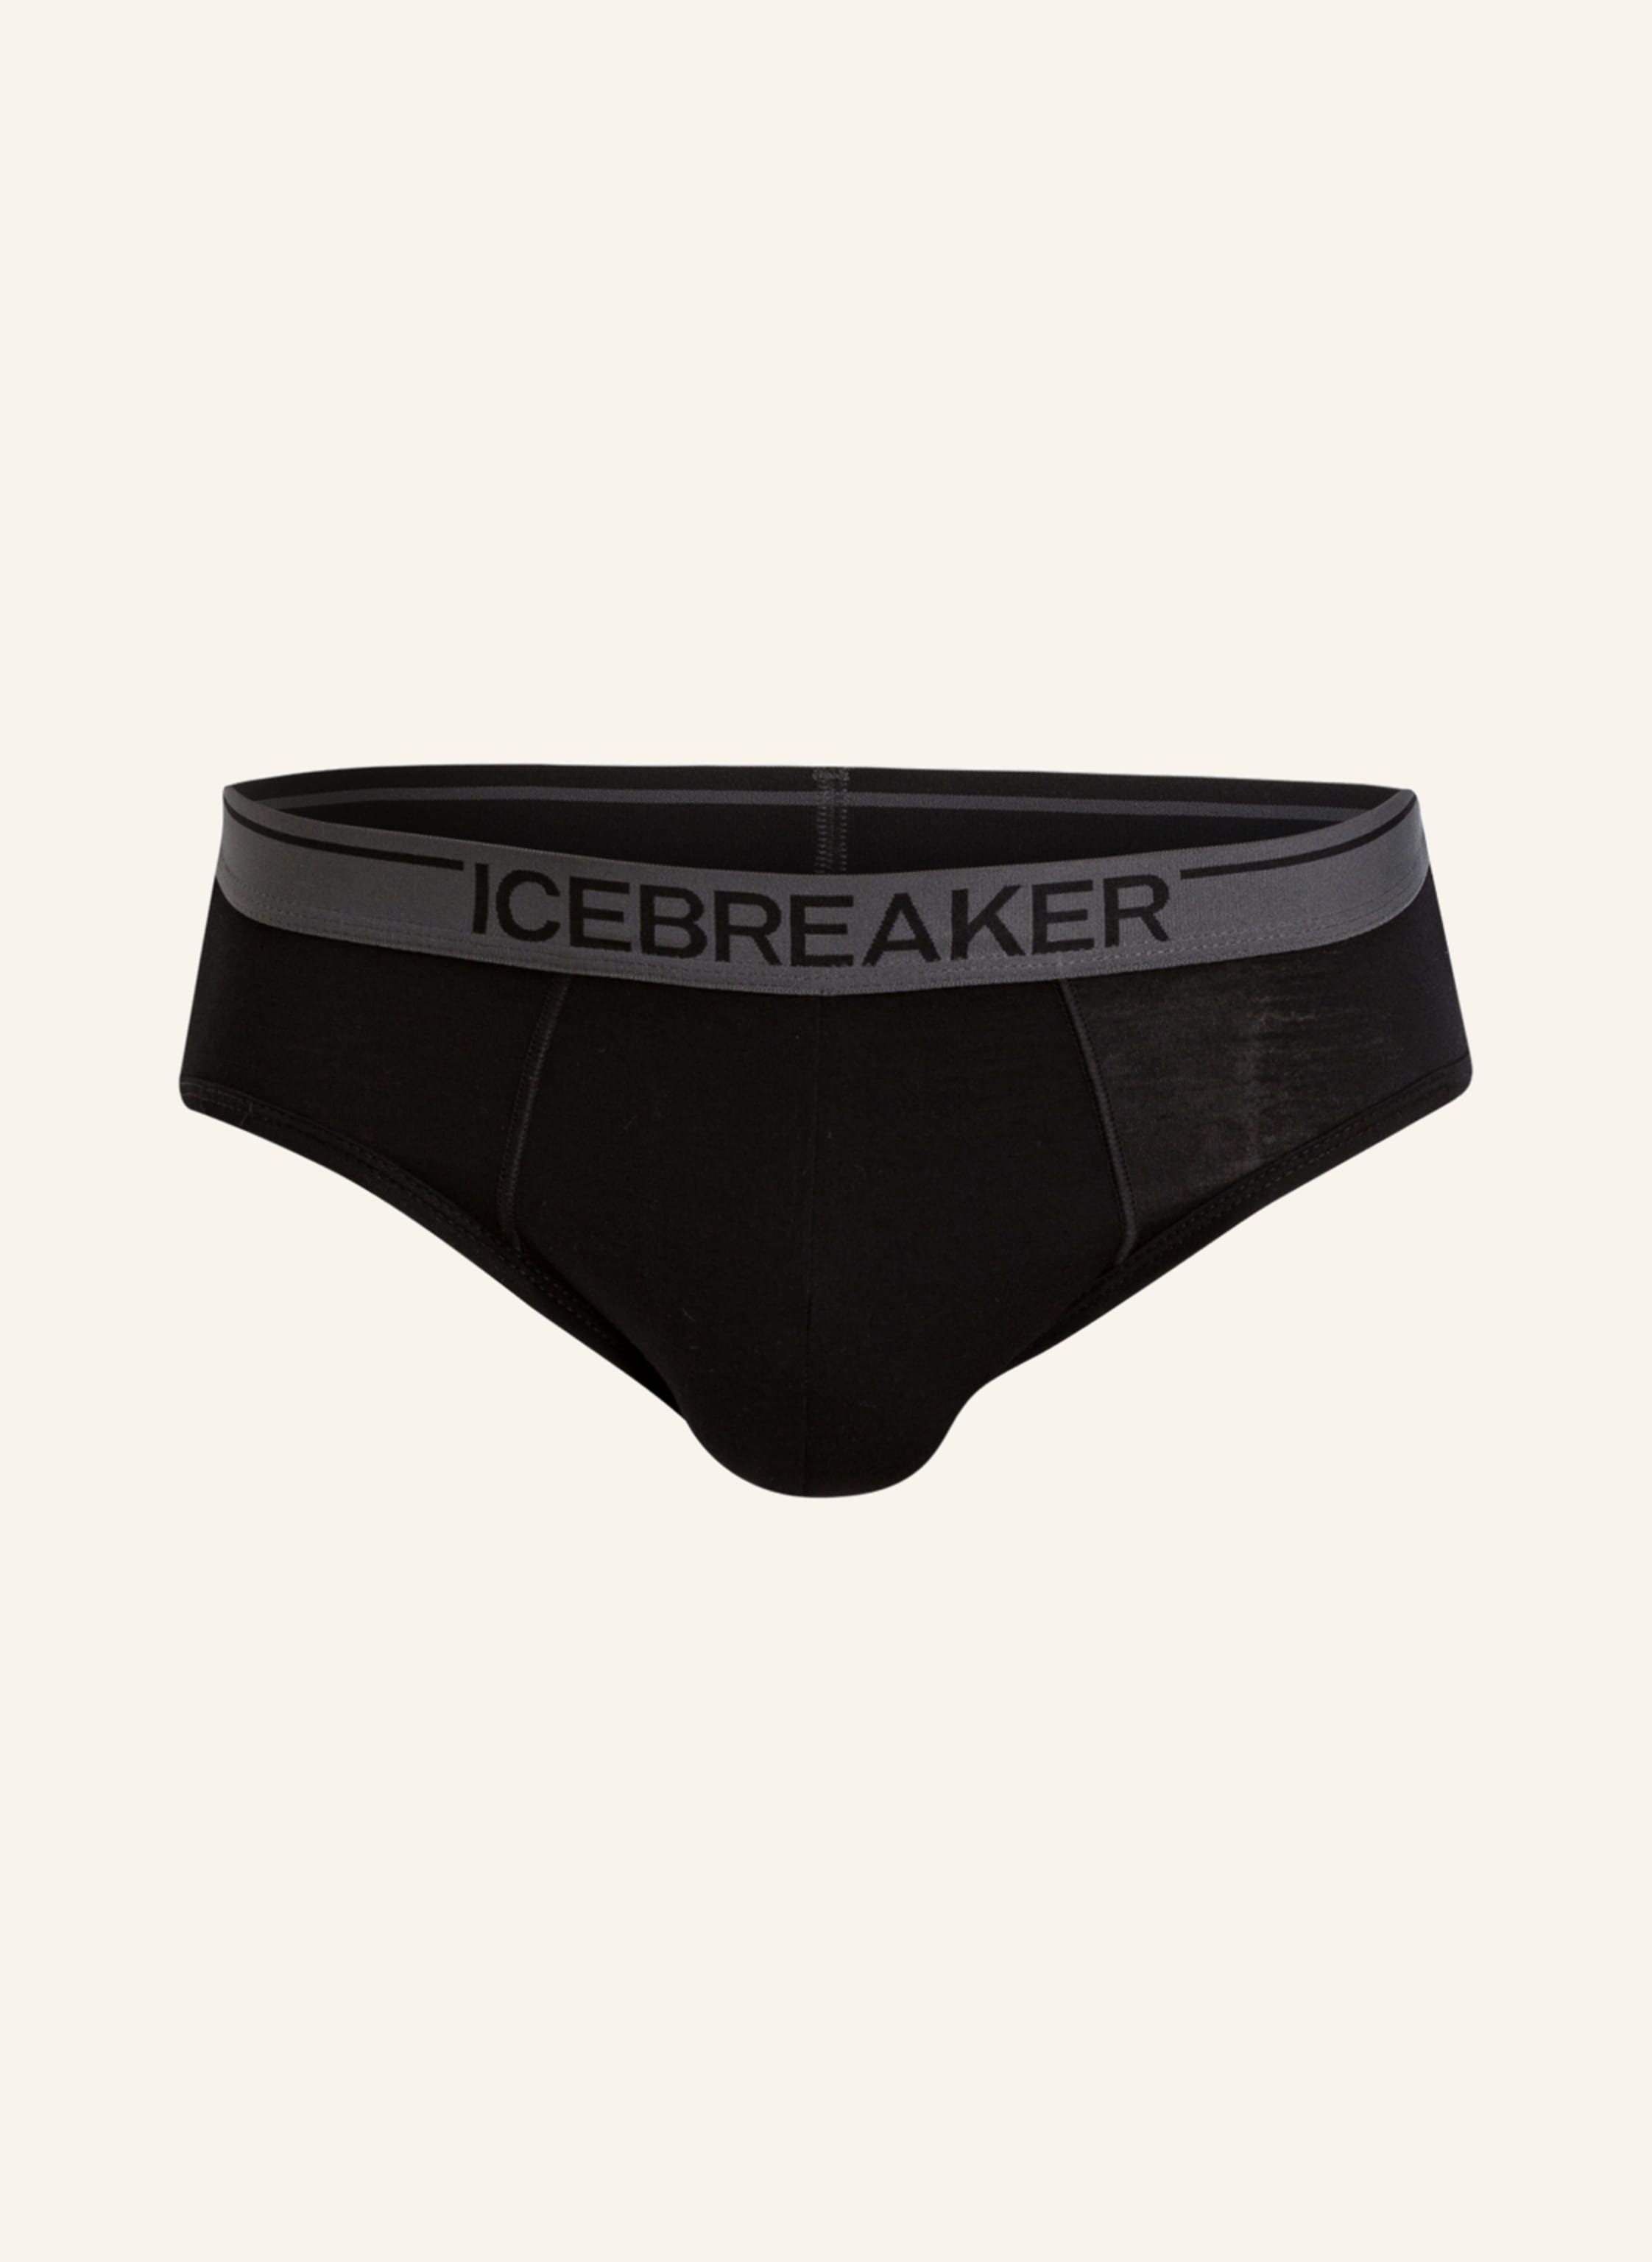 icebreaker Functional underwear briefs ANATOMICA with merino wool in black